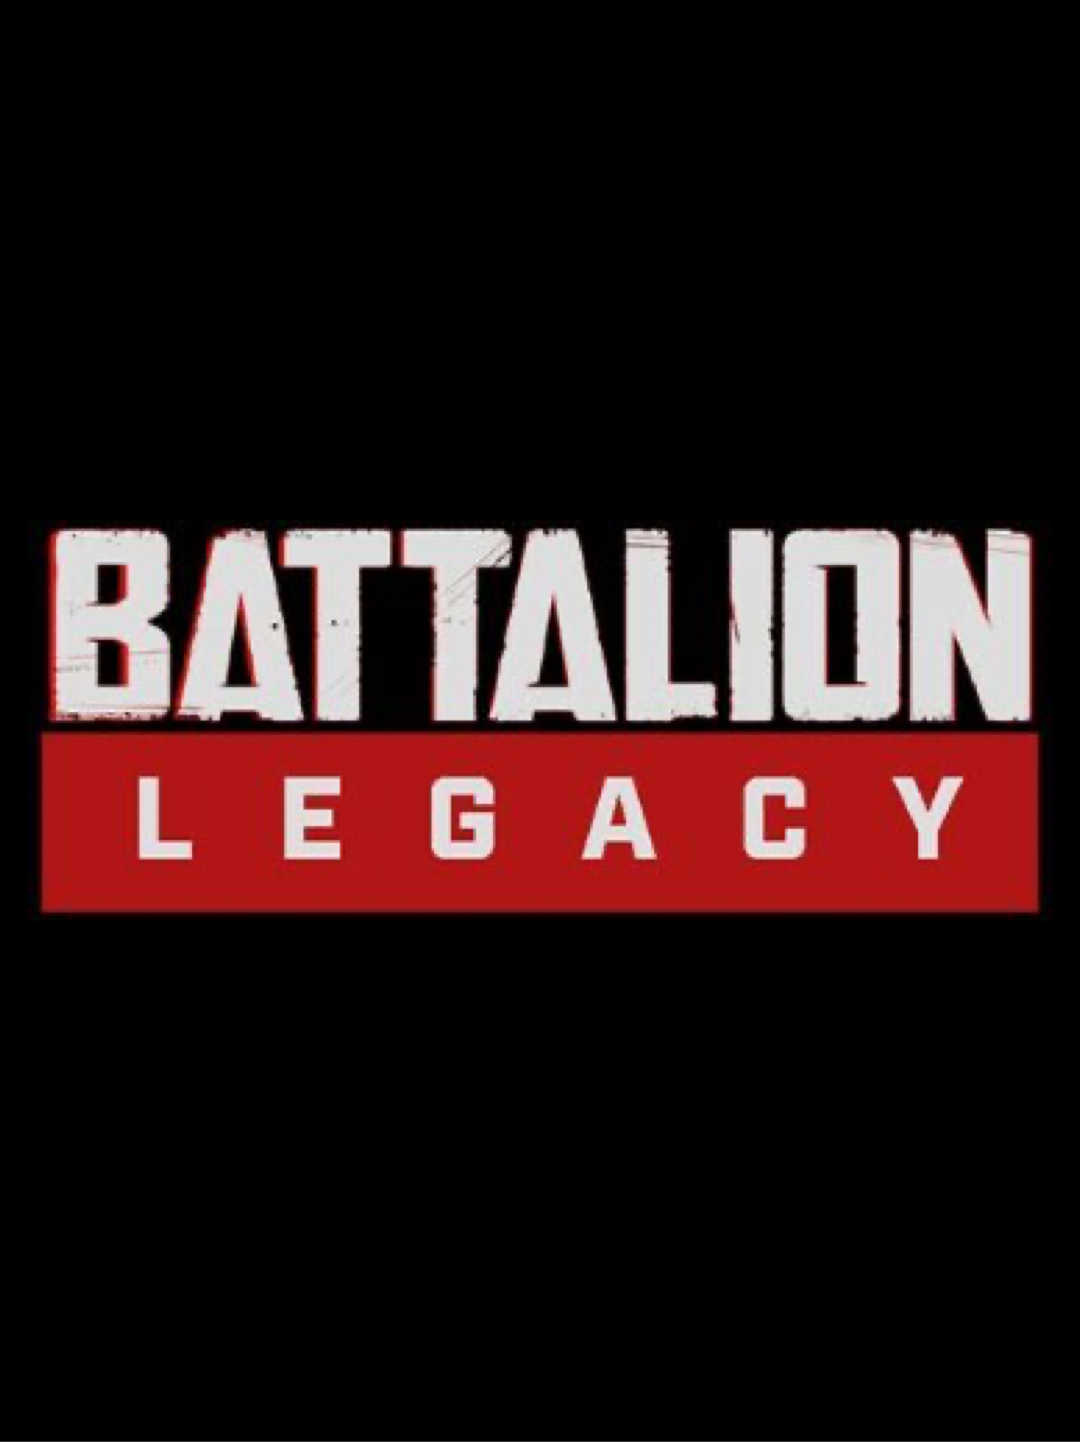 Battalion Legacy cover